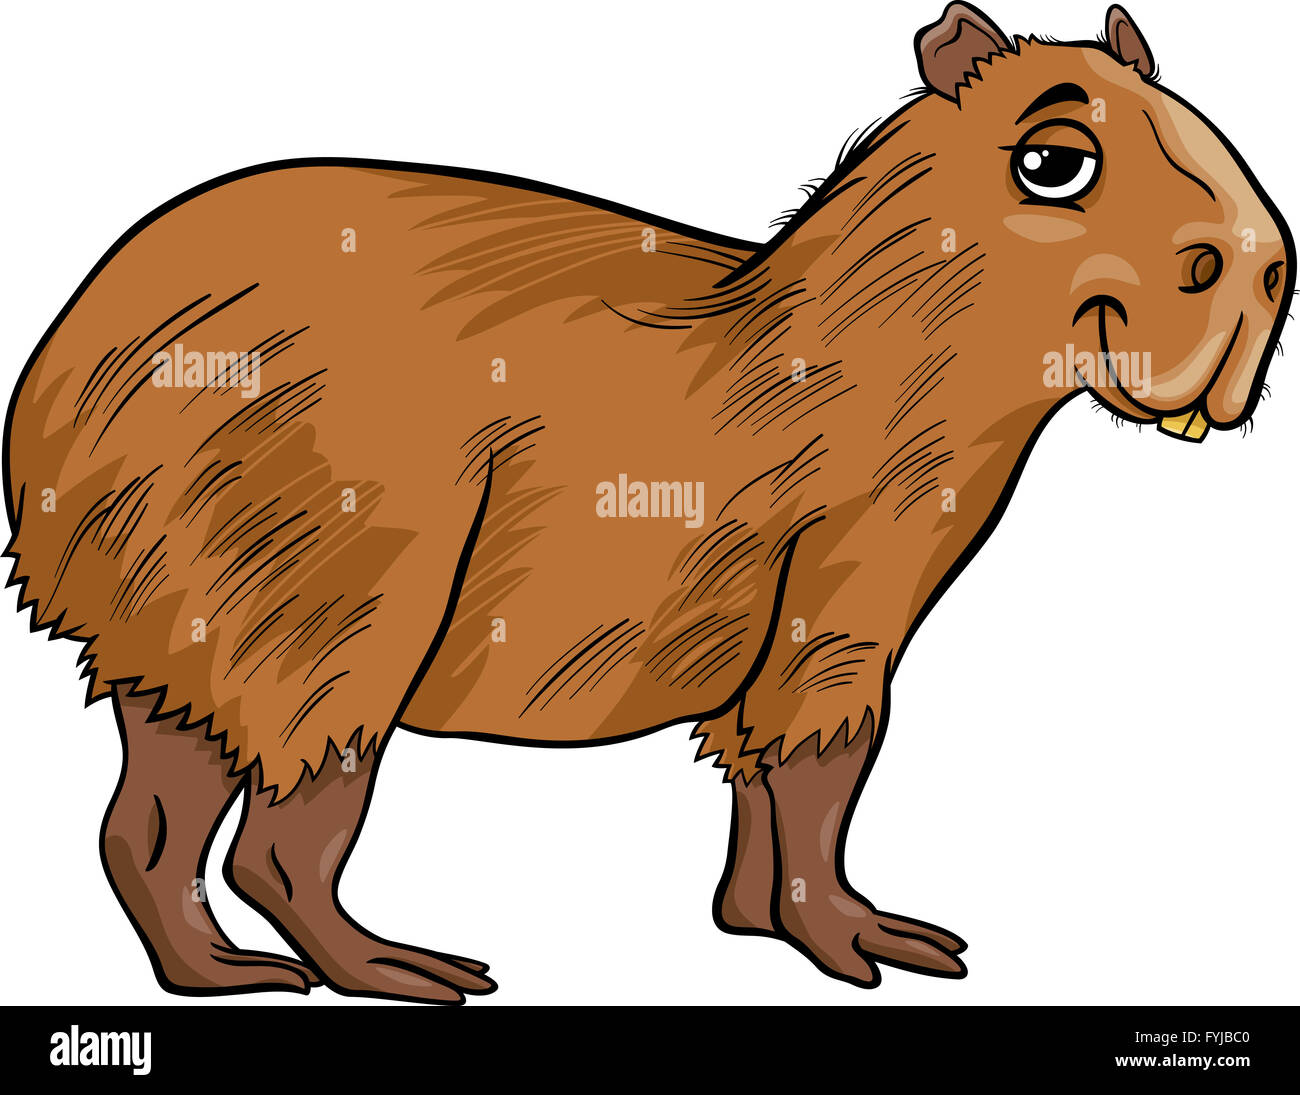 capybara animal cartoon illustration Stock Photo